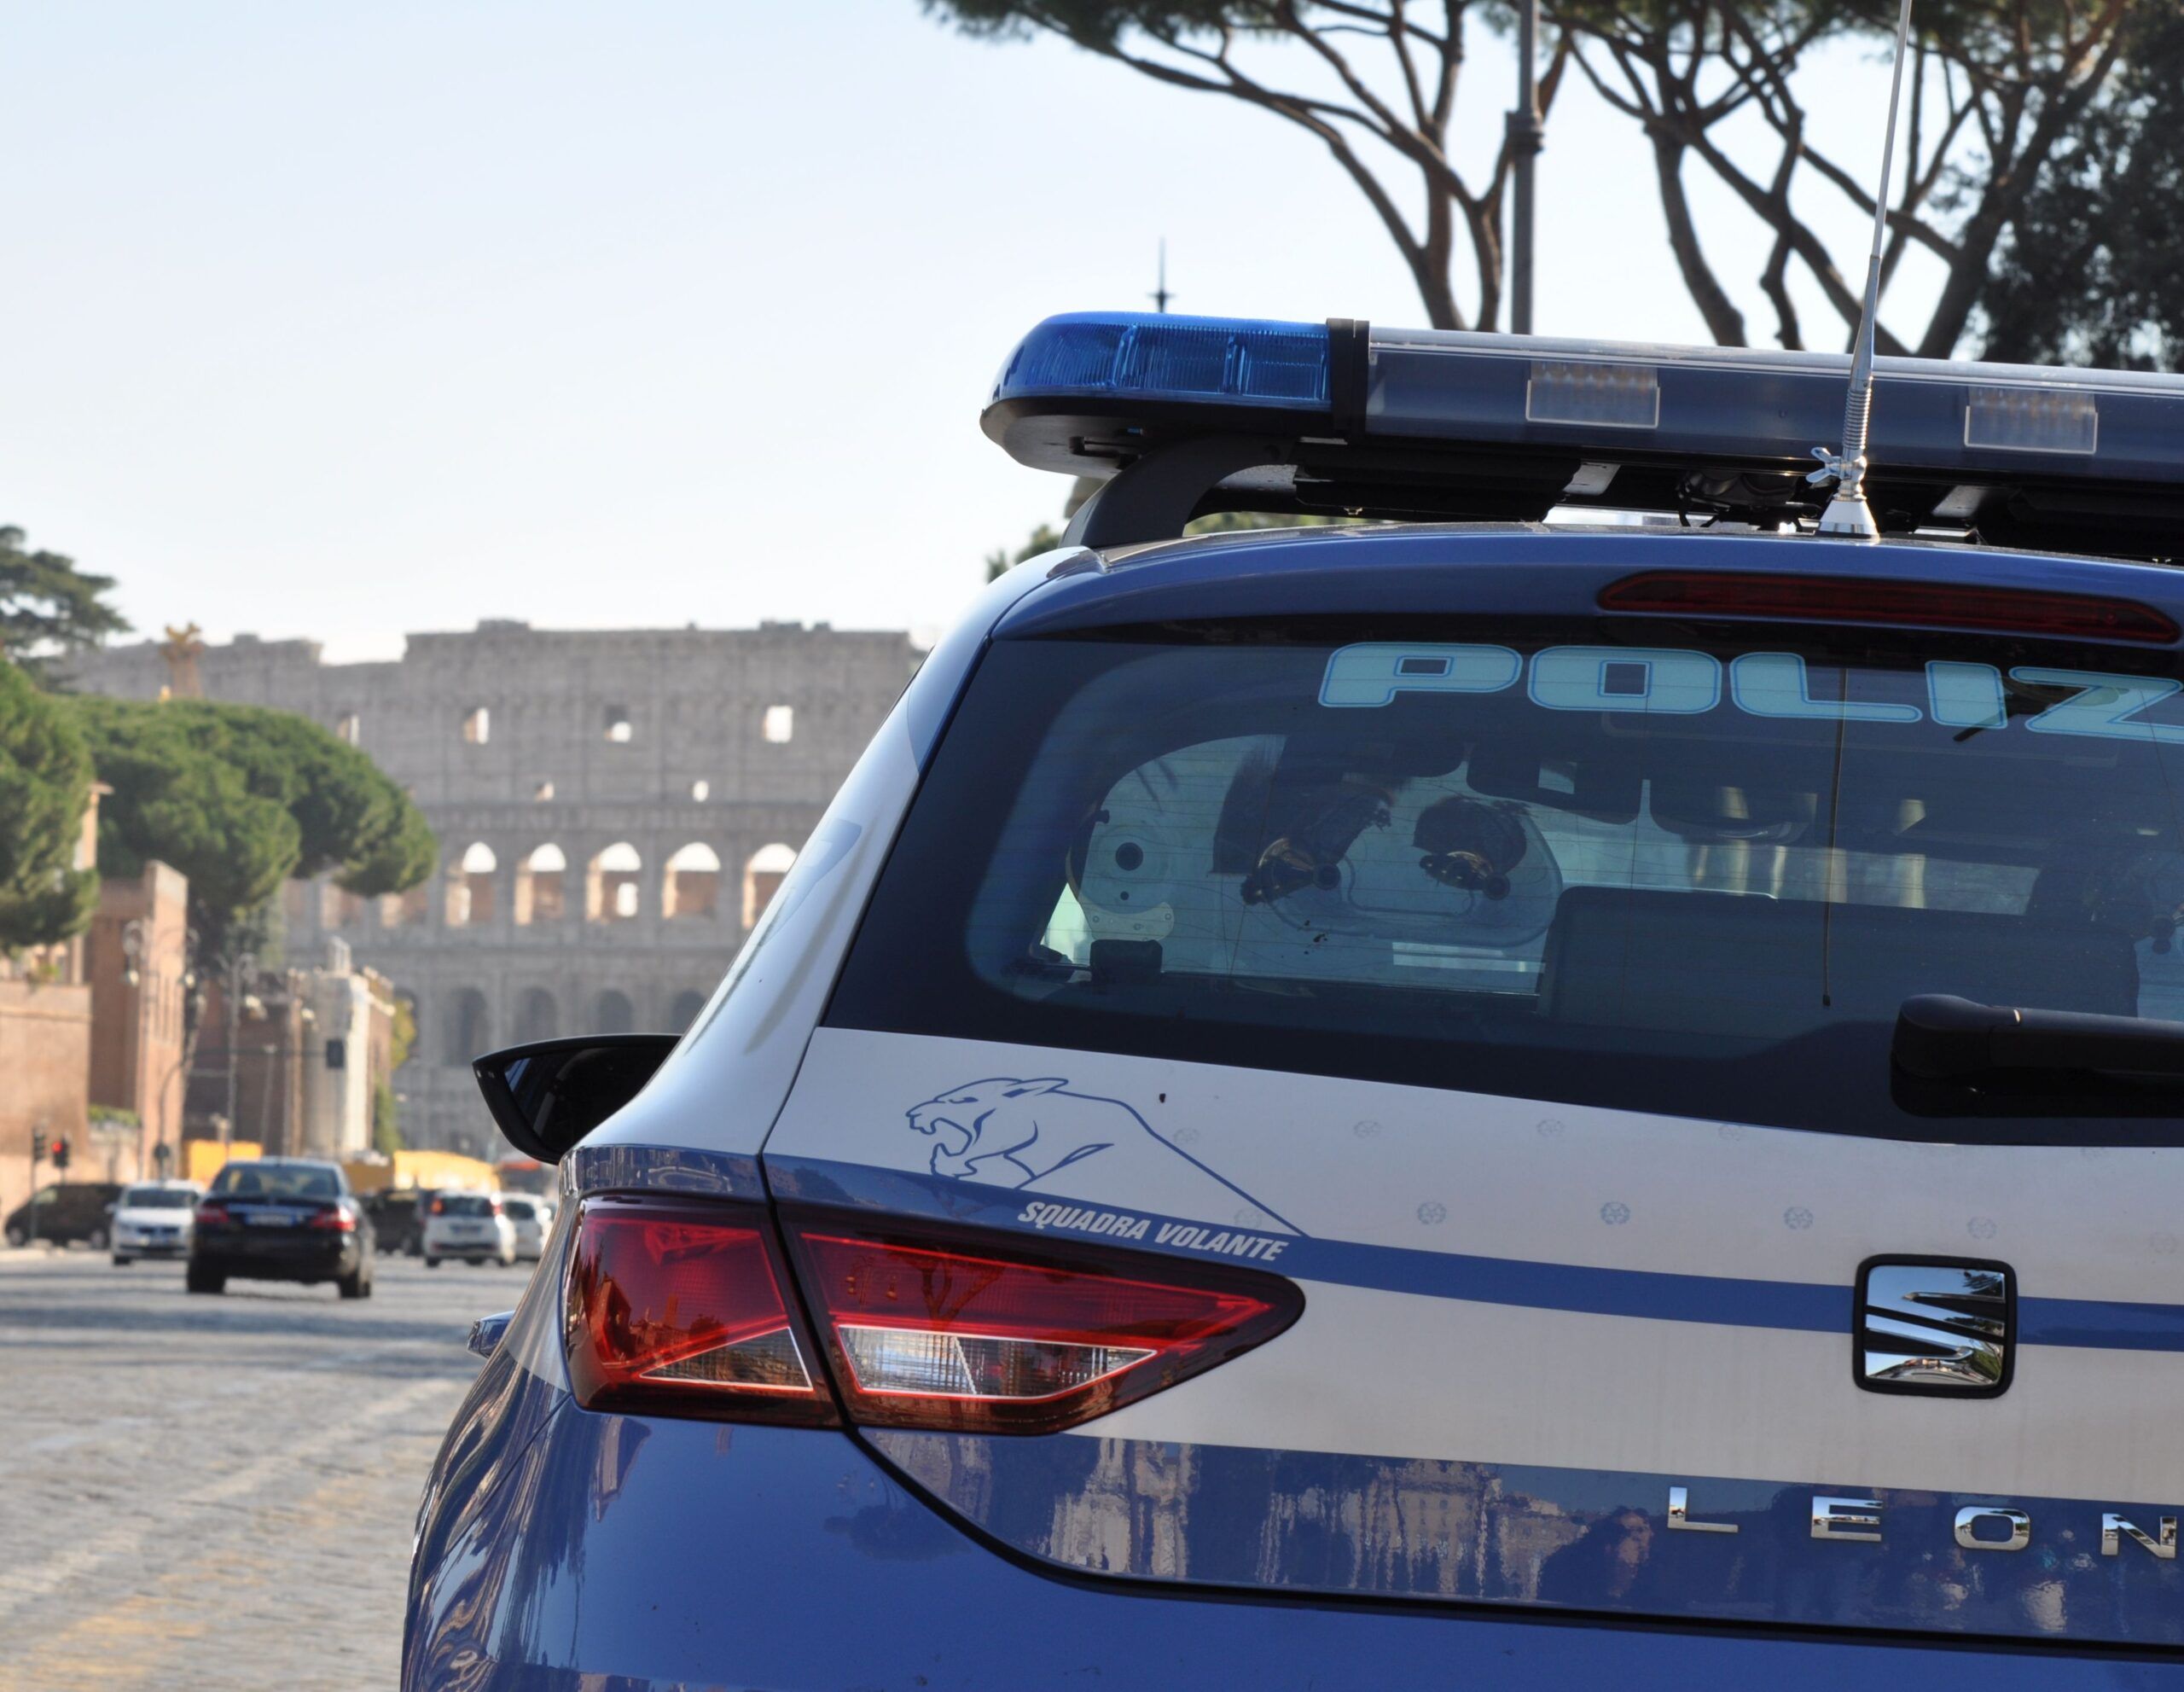 gladiatori arrestati al Colosseo: estorcevano denaro ai turisti dopo un selfie